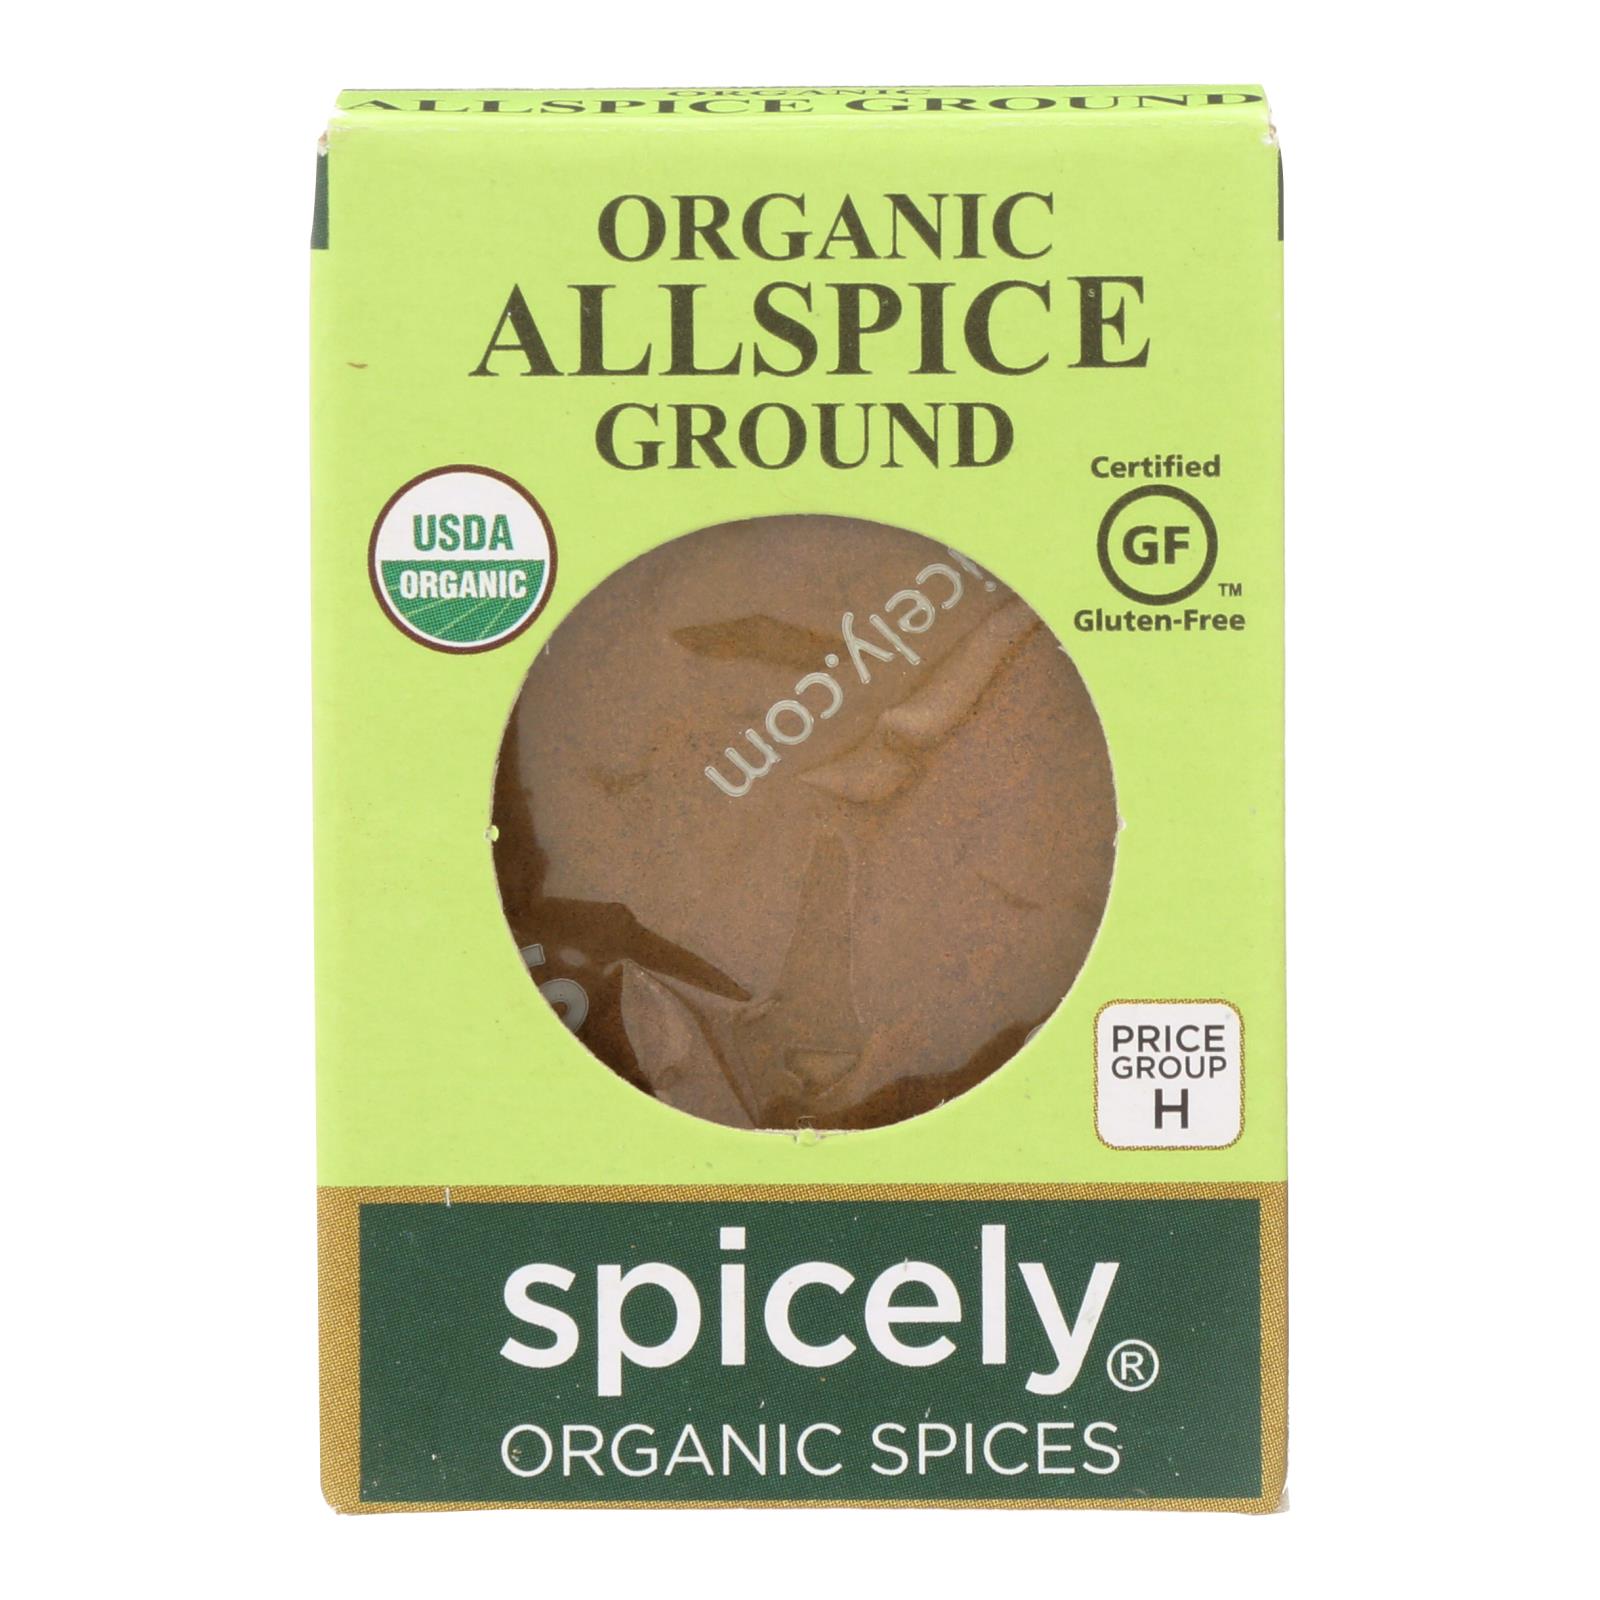 Spicely Organics - Organic Allspice - Ground - 6개 묶음상품 - 0.45 oz.